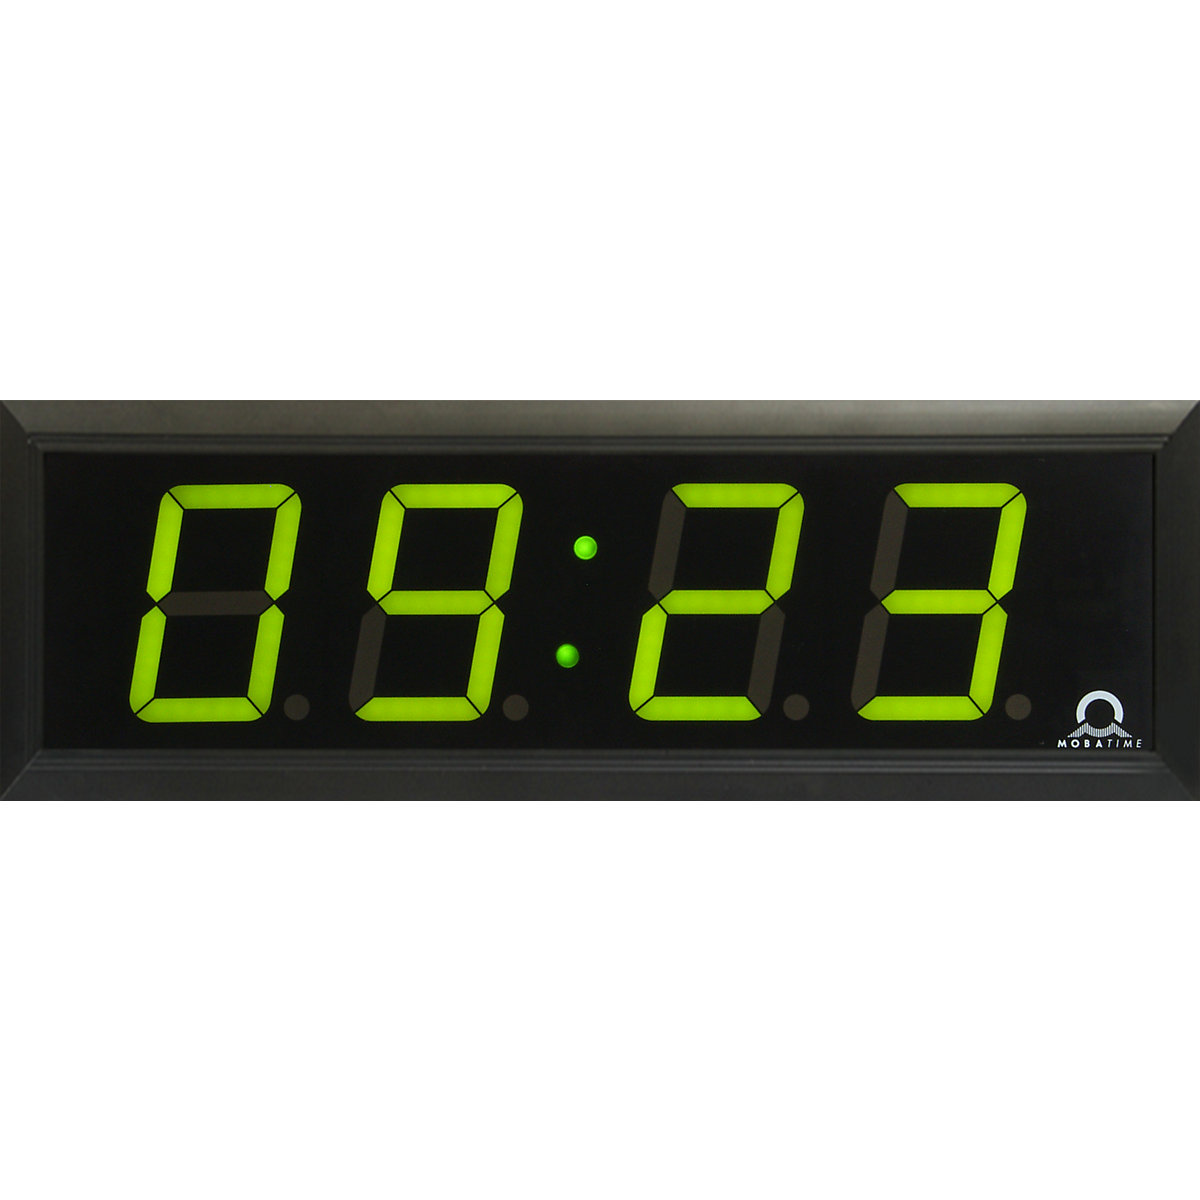 LED digital clock